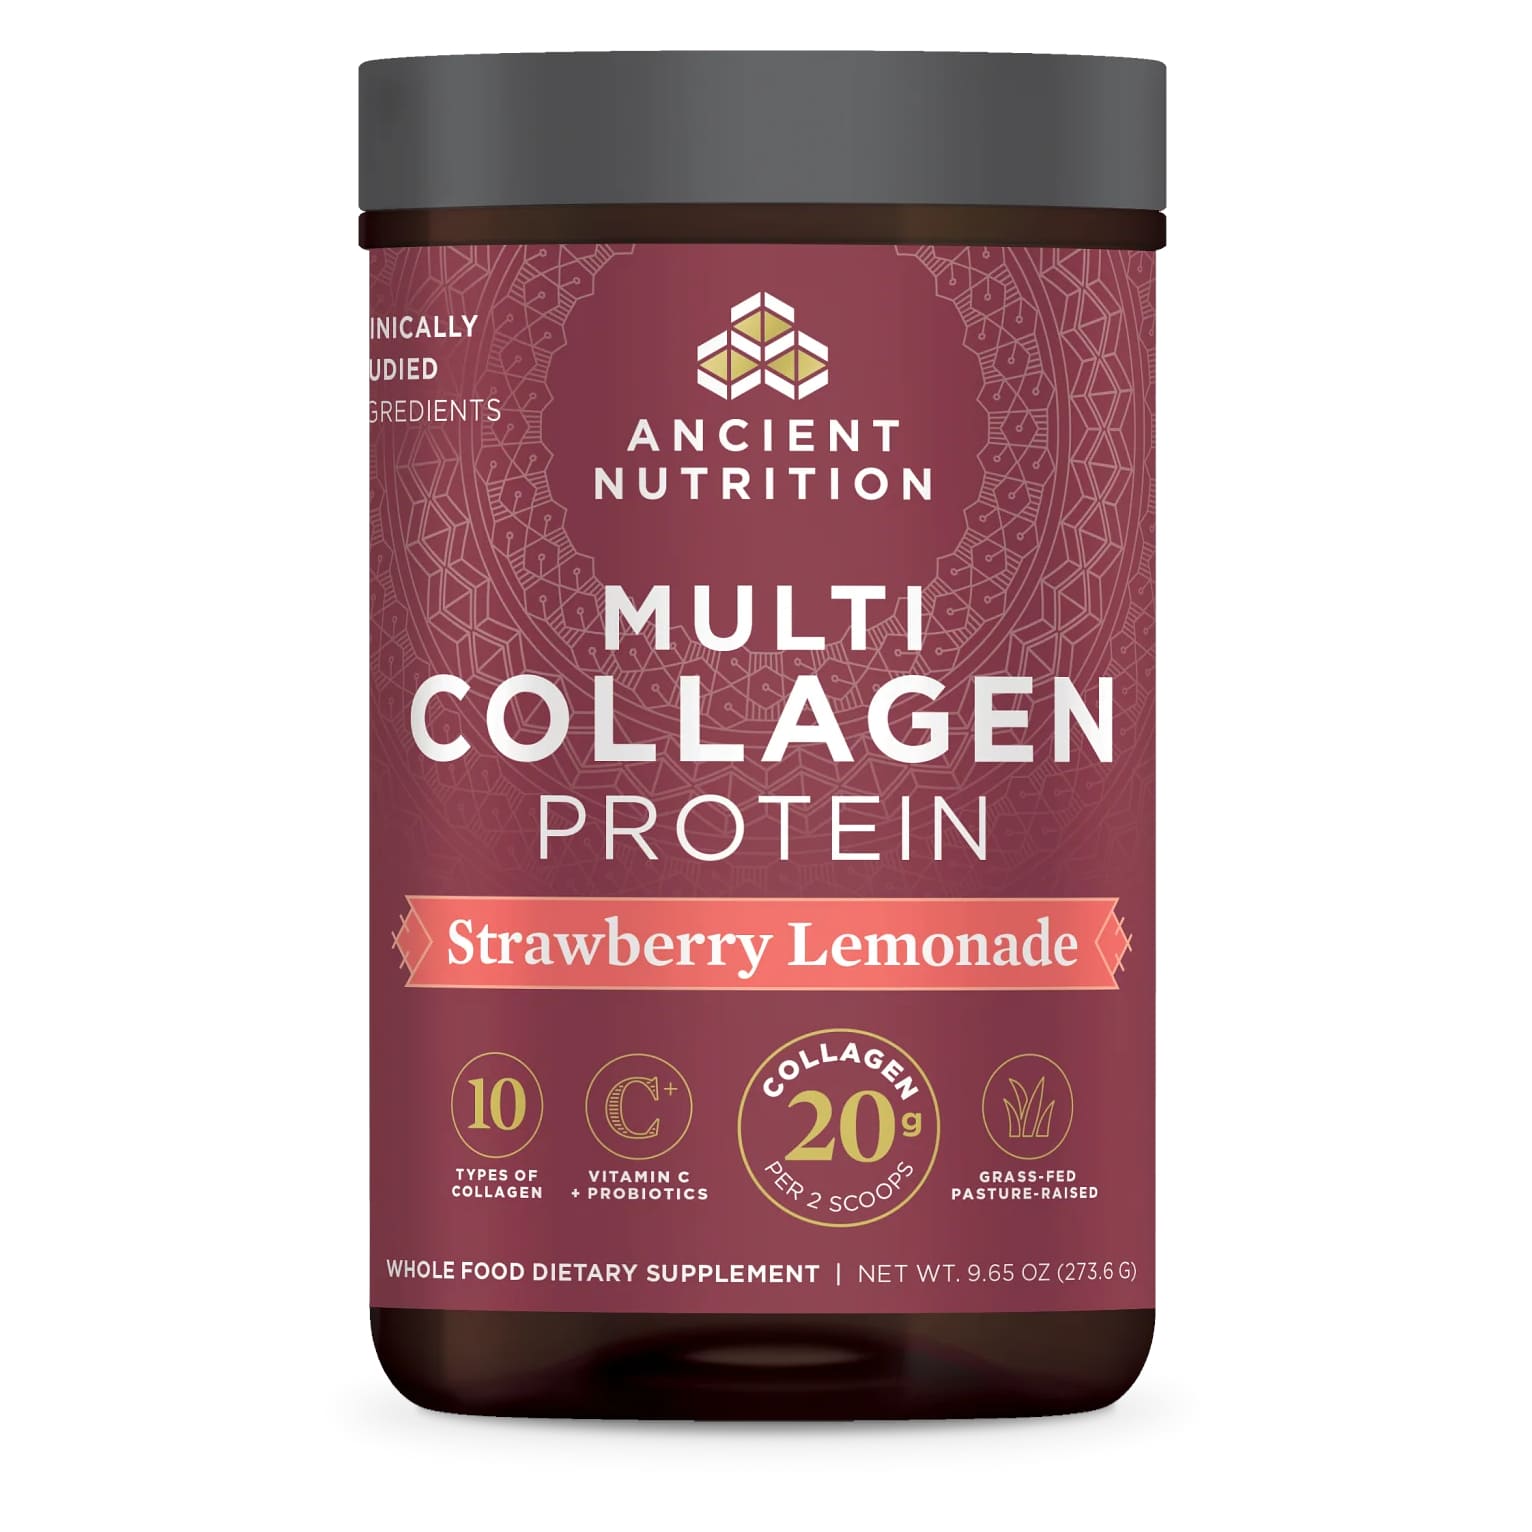 Коллаген Ancient Nutrition Multi Protein 10 Types Vitamin C + Probiotics Strawberry Lemonade, 273,6 г